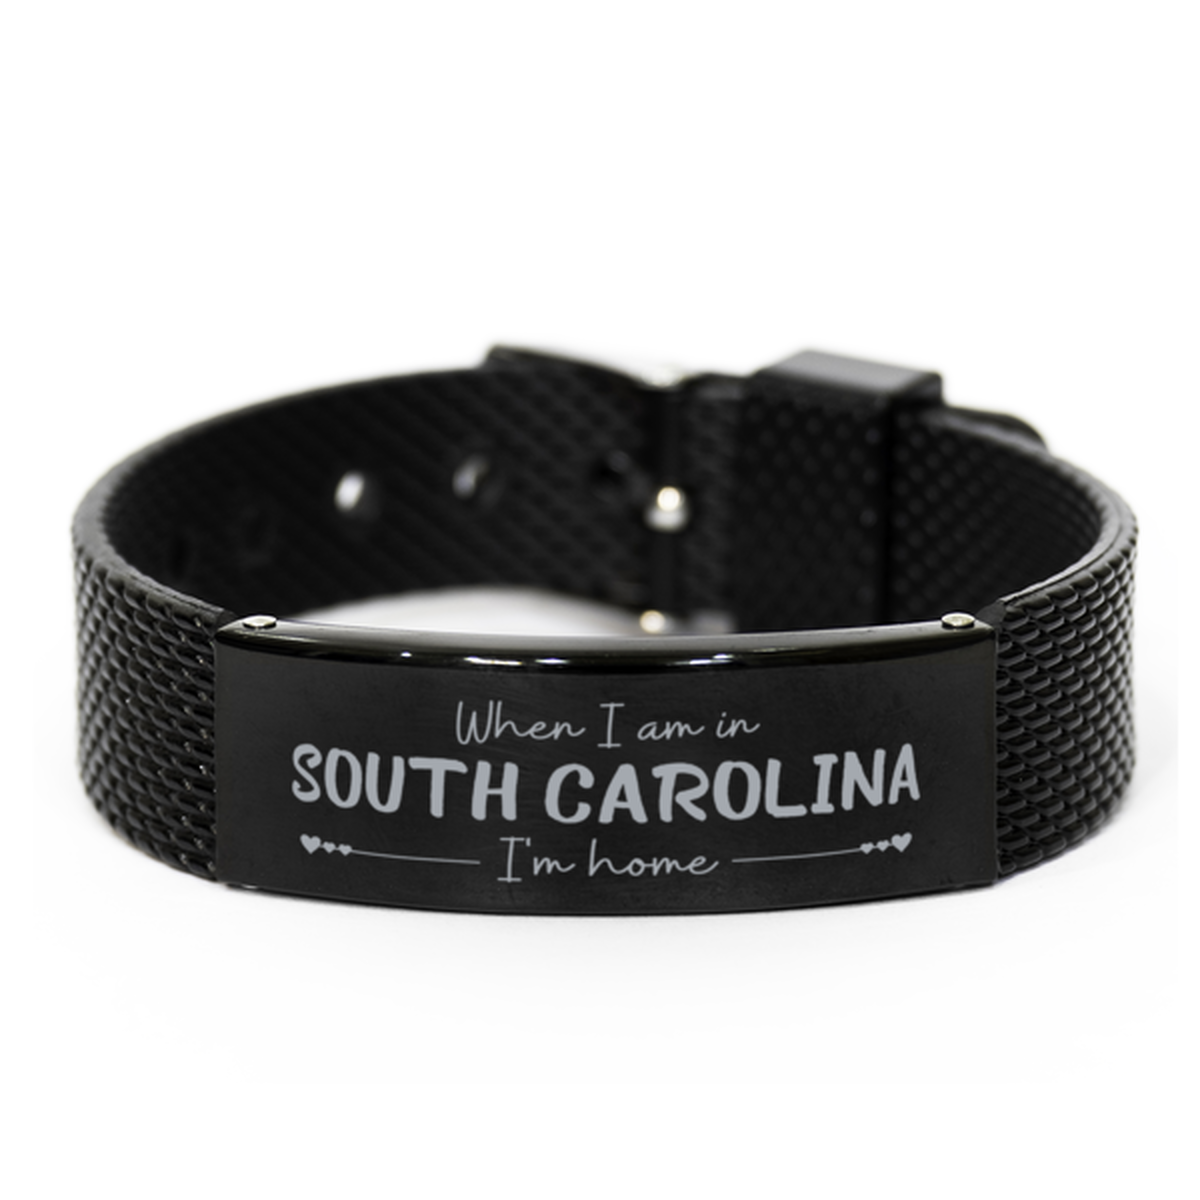 When I am in South Carolina I'm home Black Shark Mesh Bracelet, Cheap Gifts For South Carolina, State South Carolina Birthday Gifts for Friends Coworker